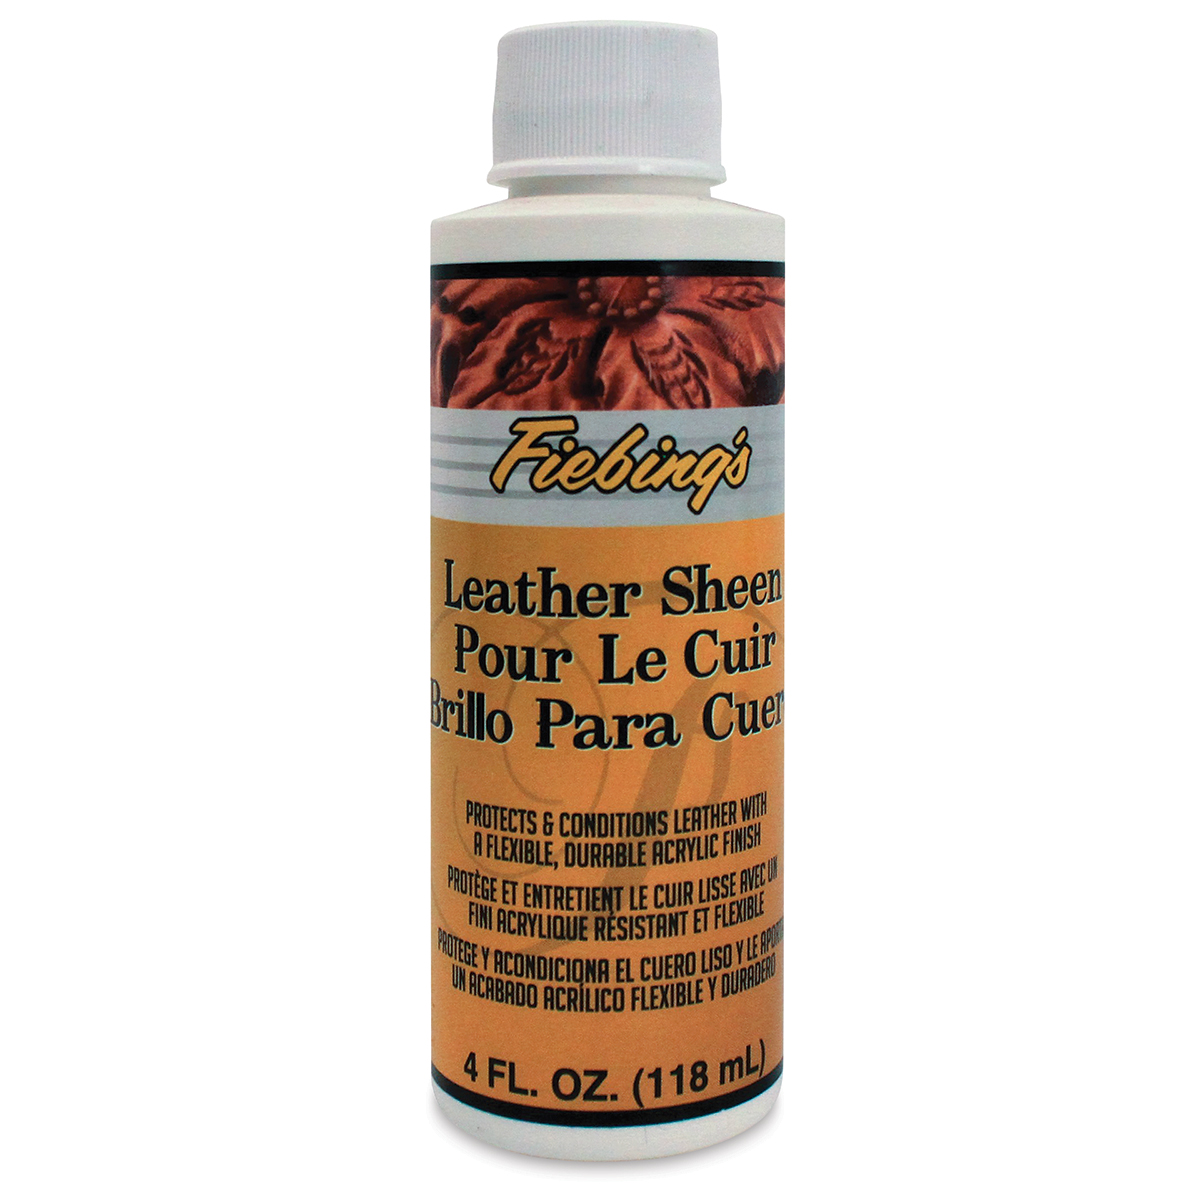 Fiebing's Leather Colours - J. Wood Leathers Ltd